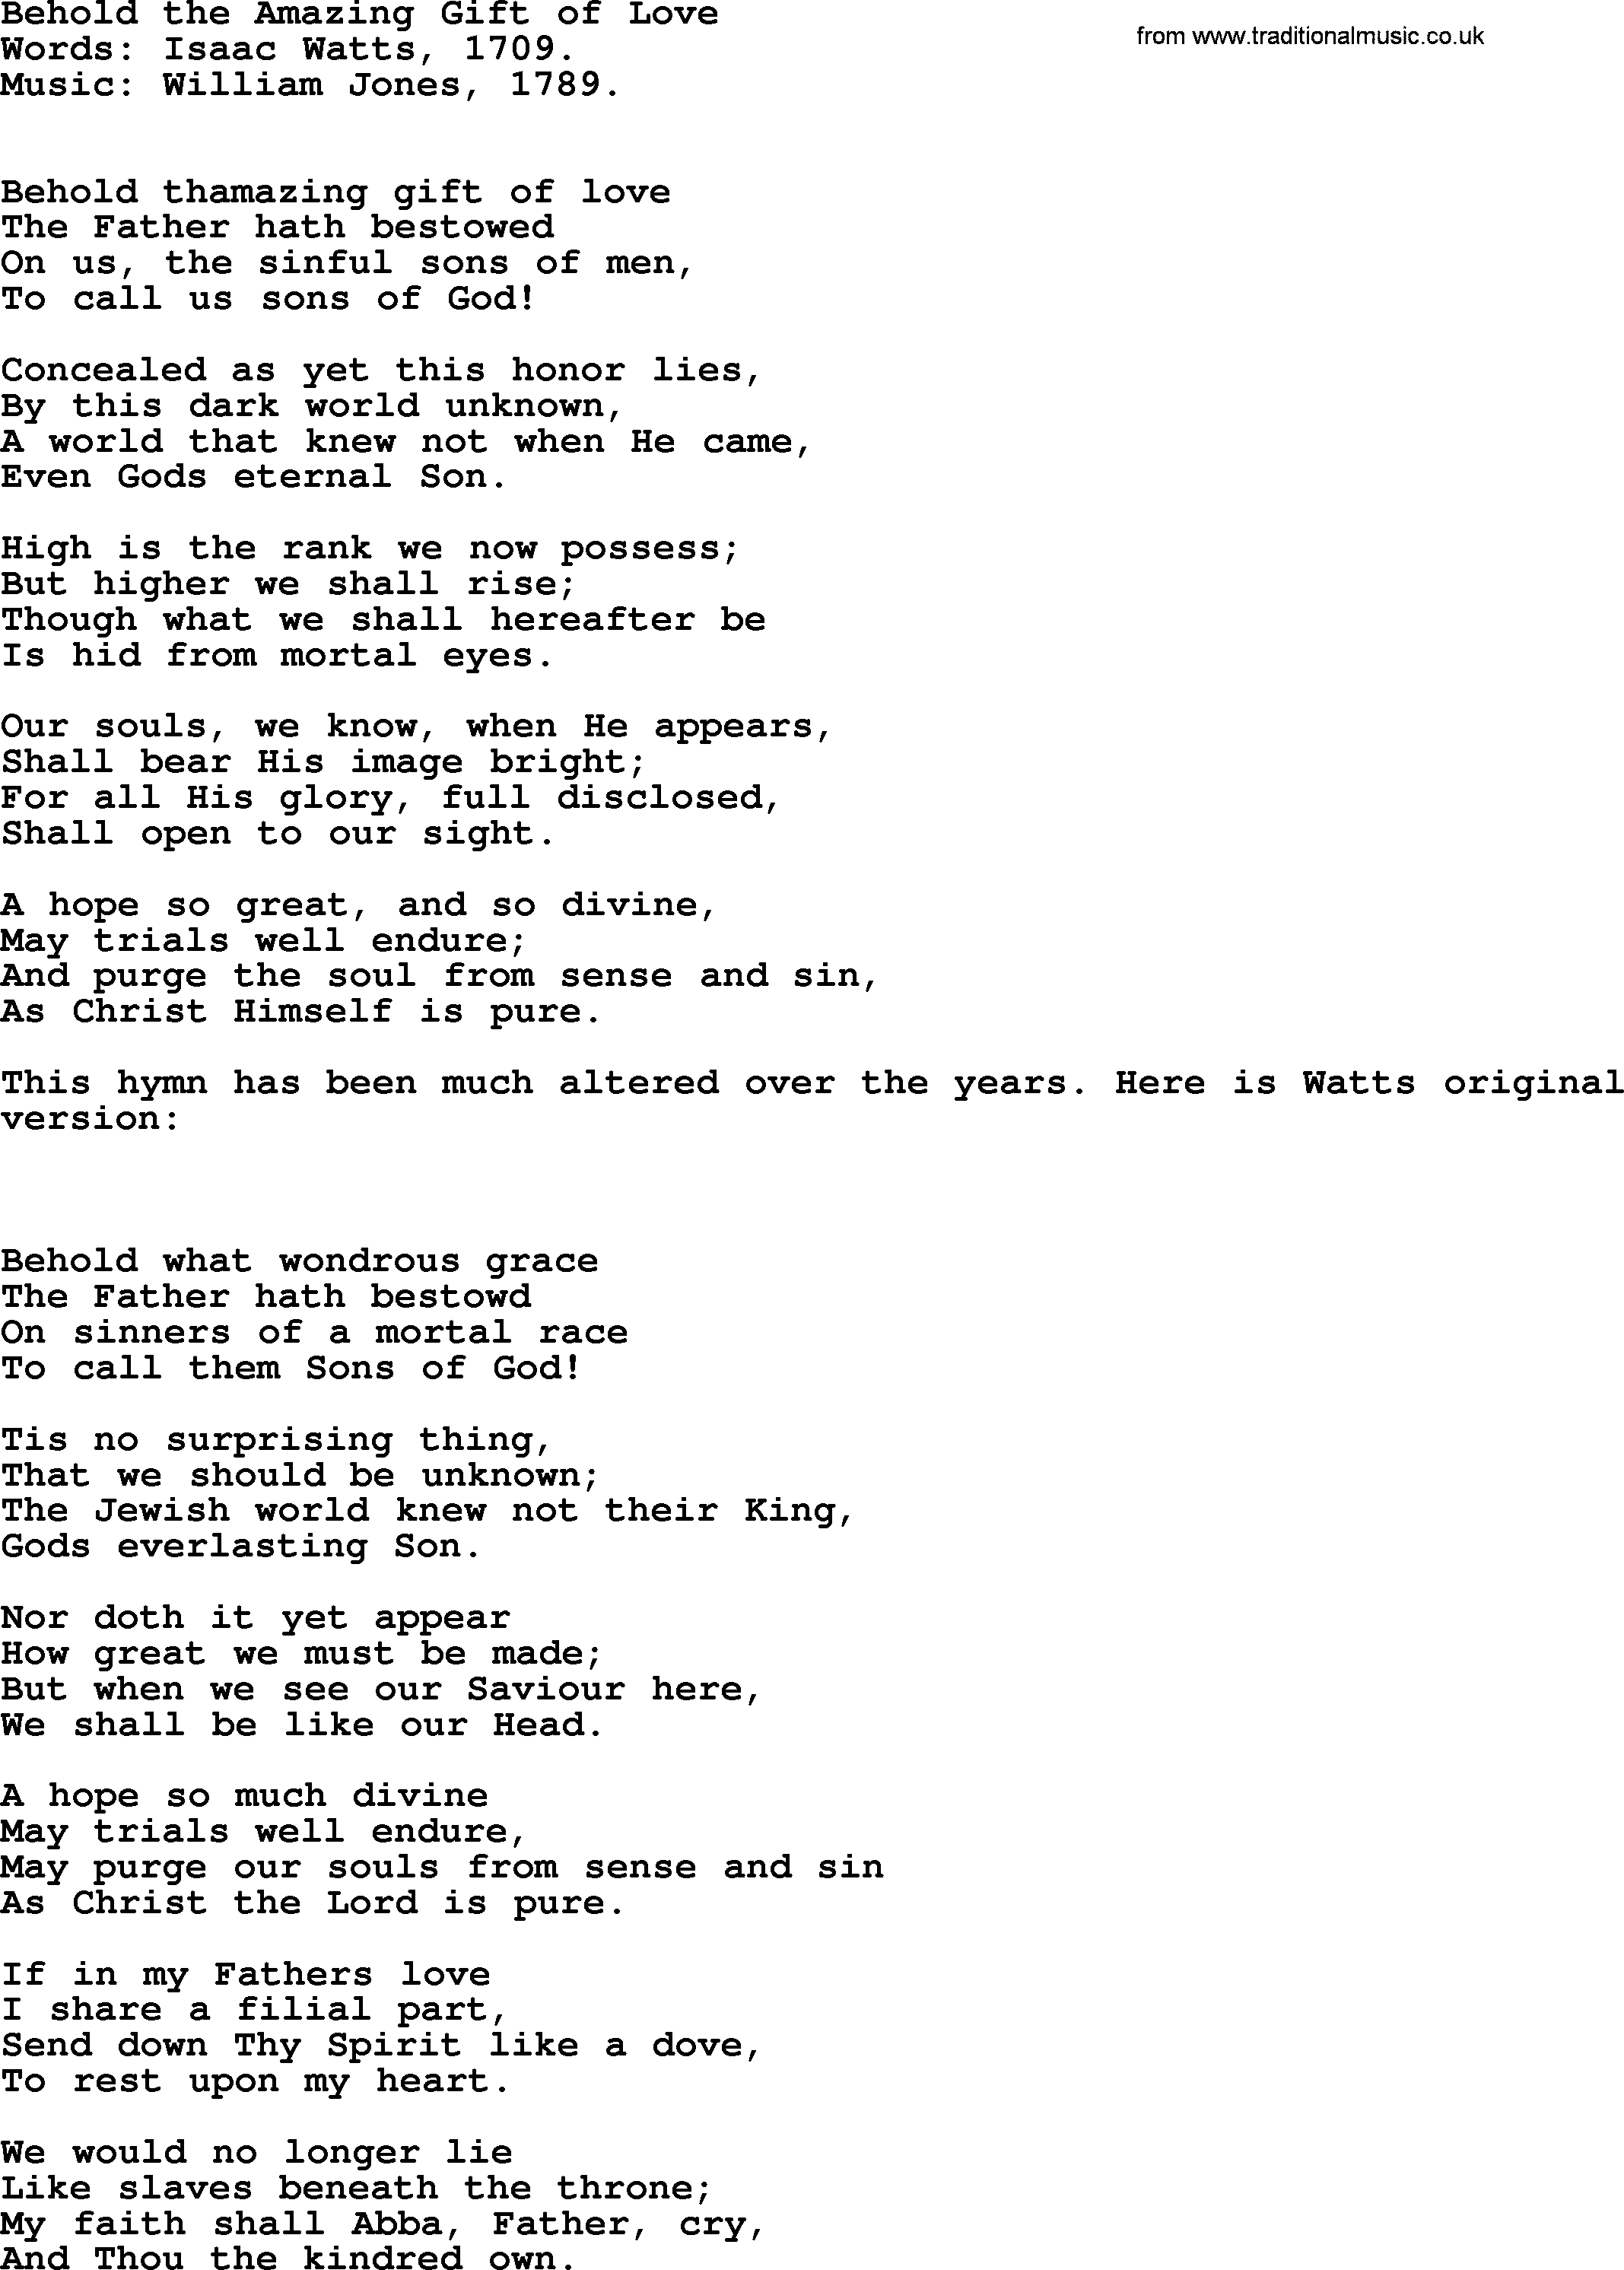 Isaac Watts Christian hymn: Behold the Amazing Gift of Love- lyricss